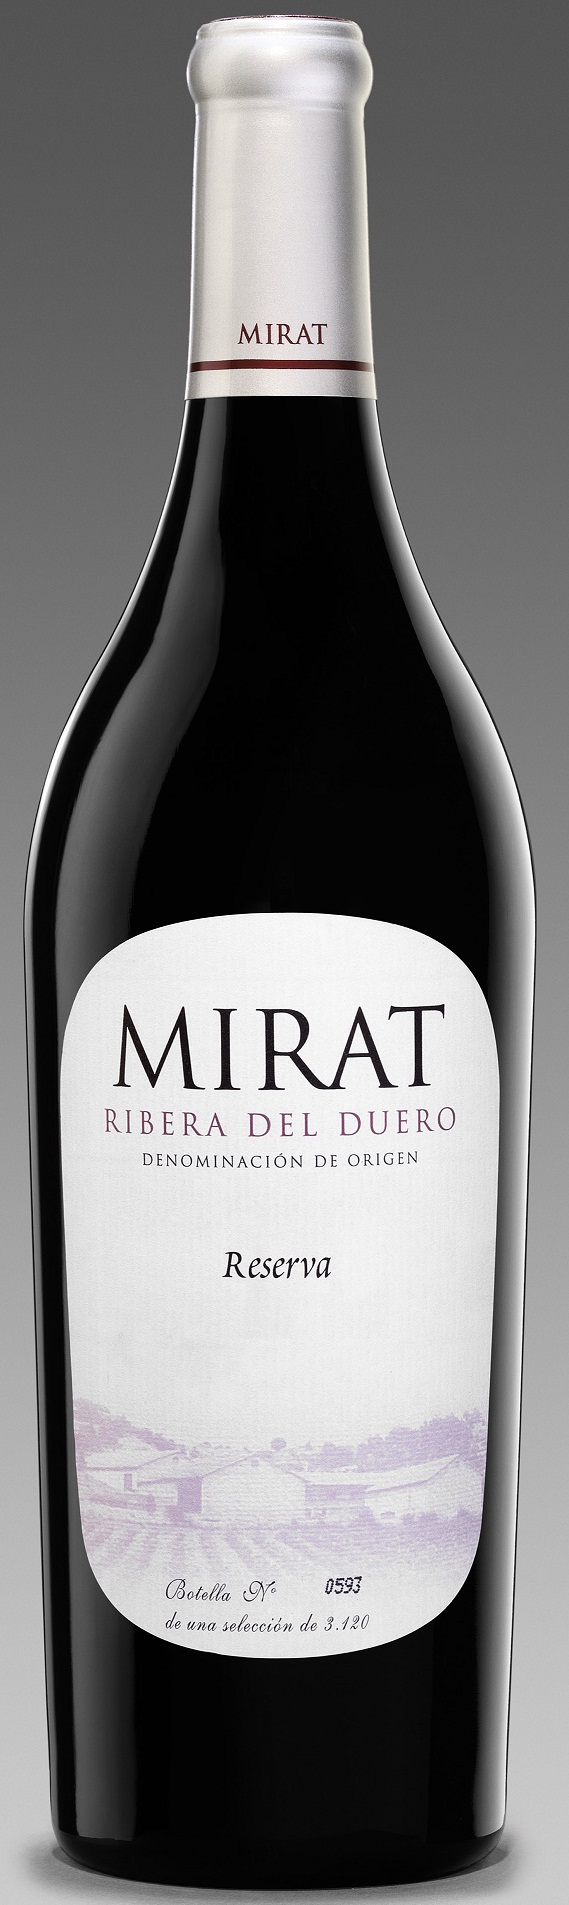 Logo del vino Mirat 2003 Reserva